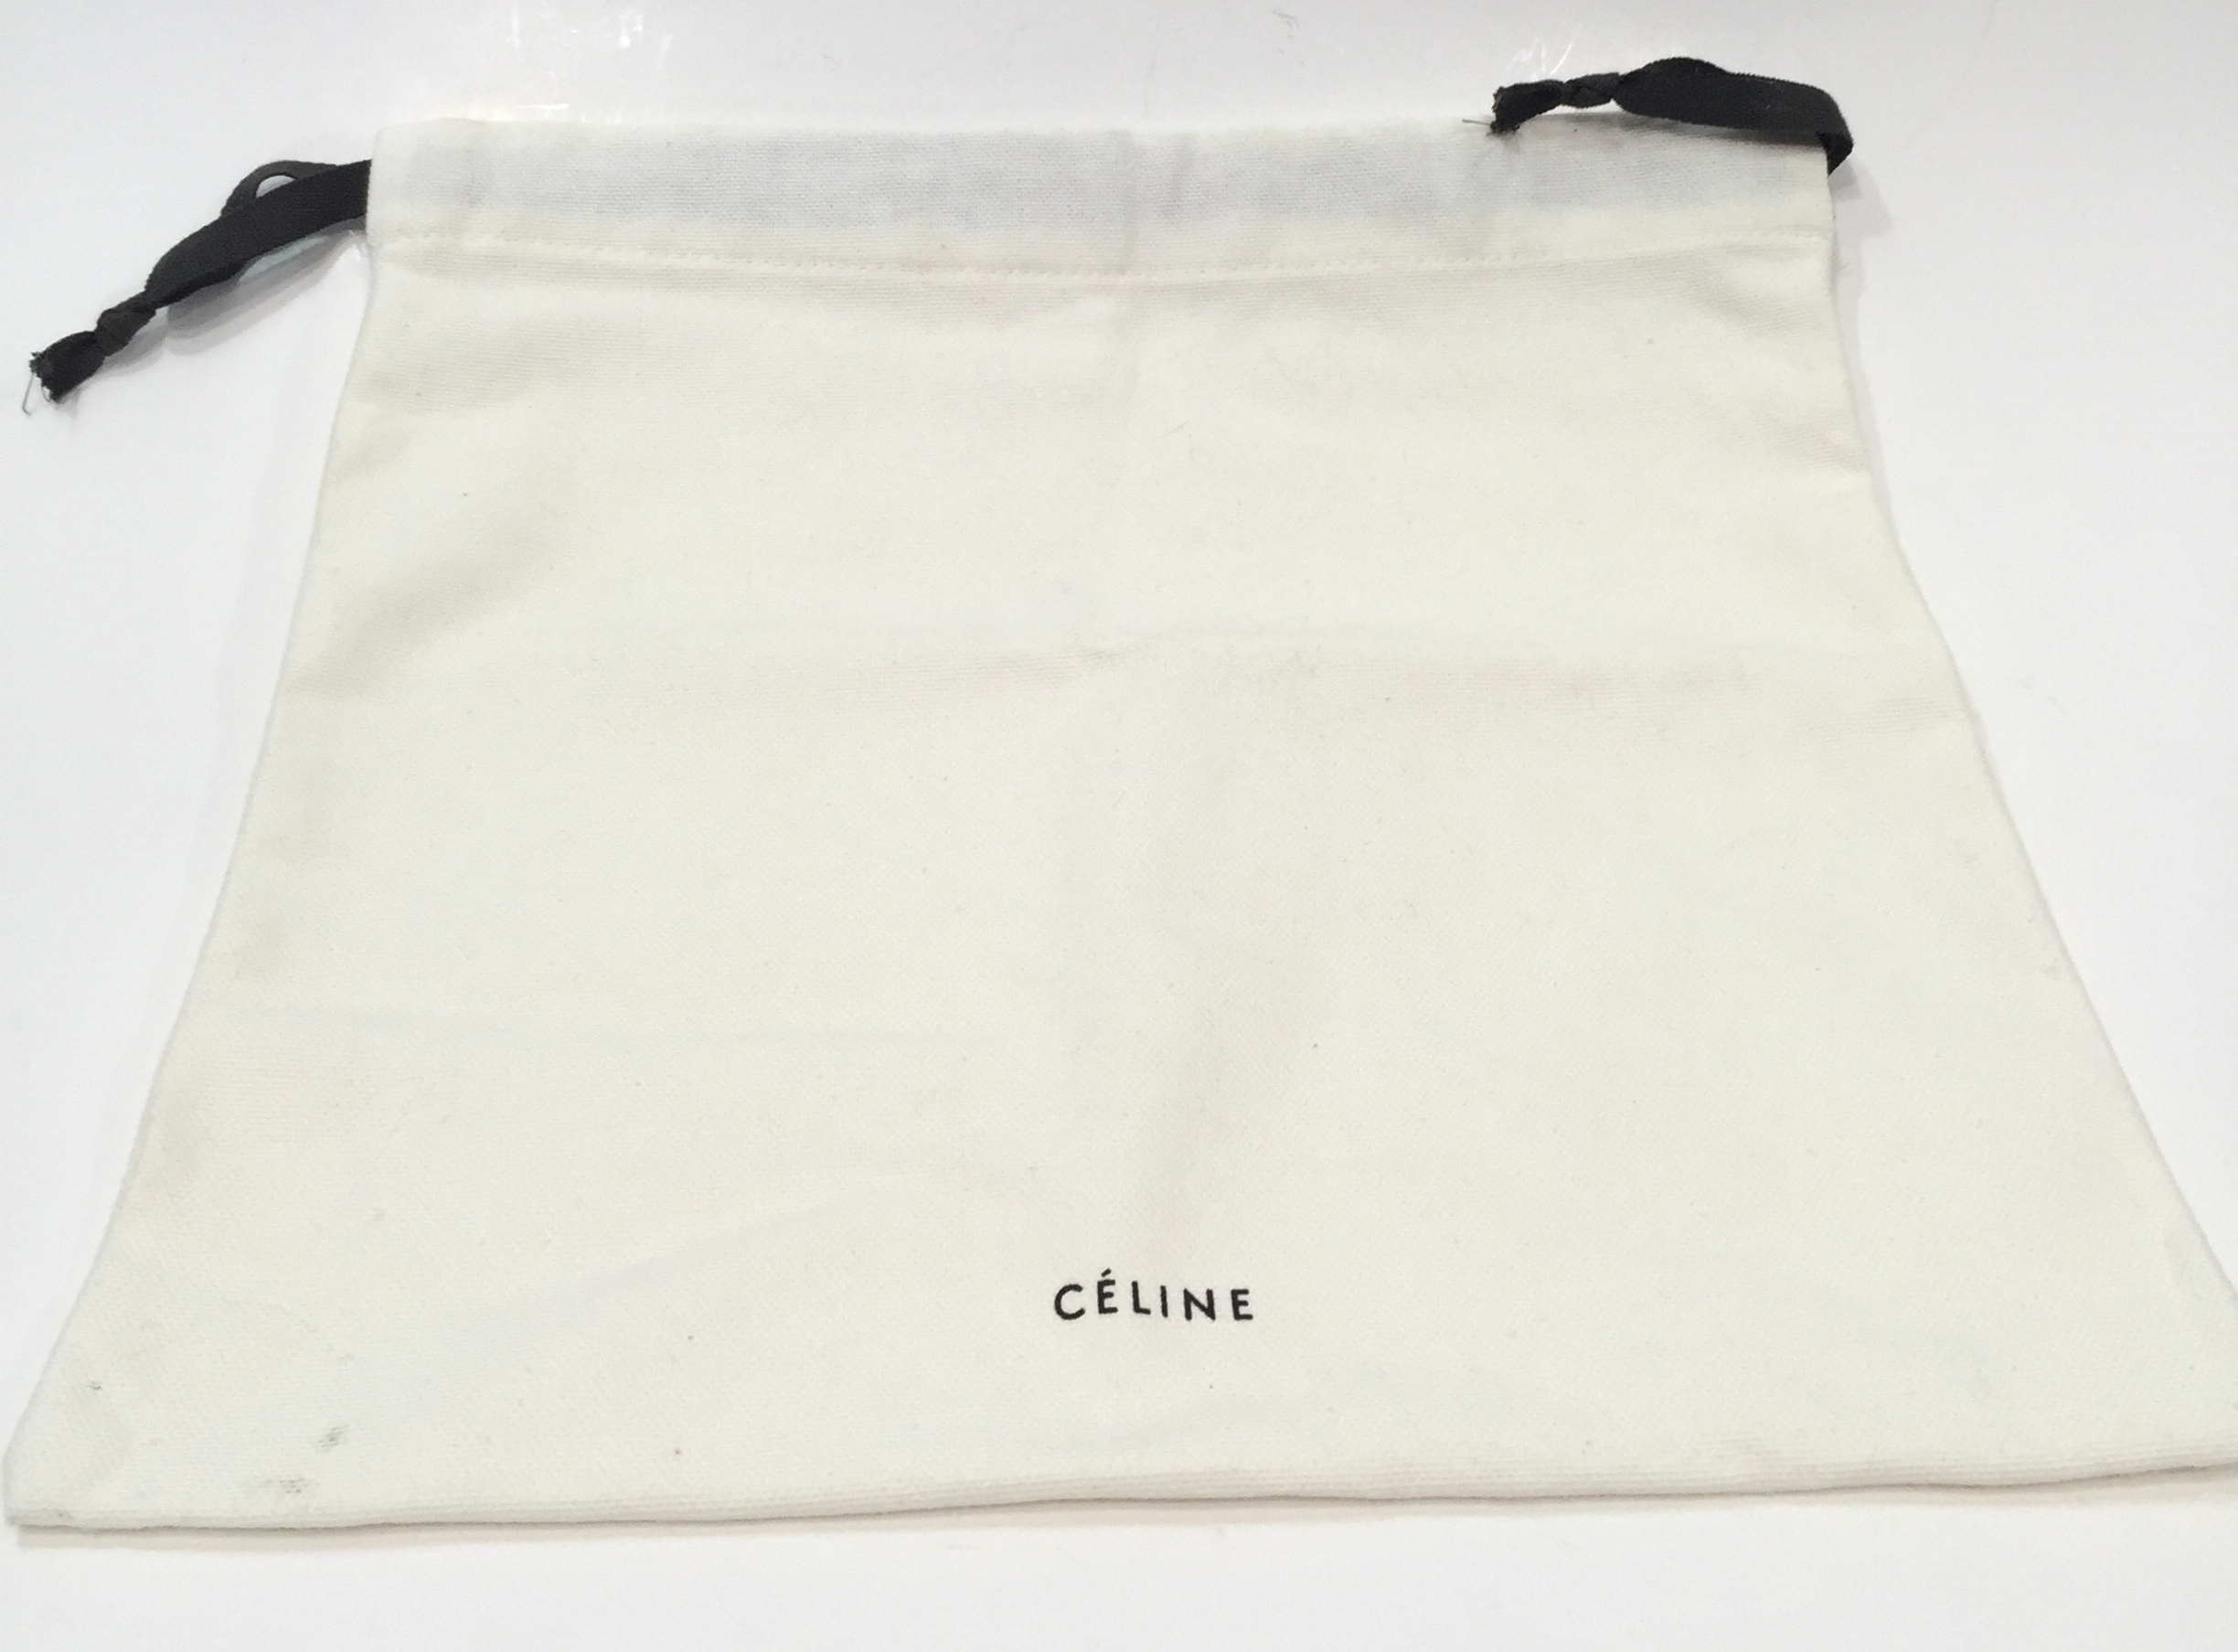 celine bags and prices - celine clutch handbag